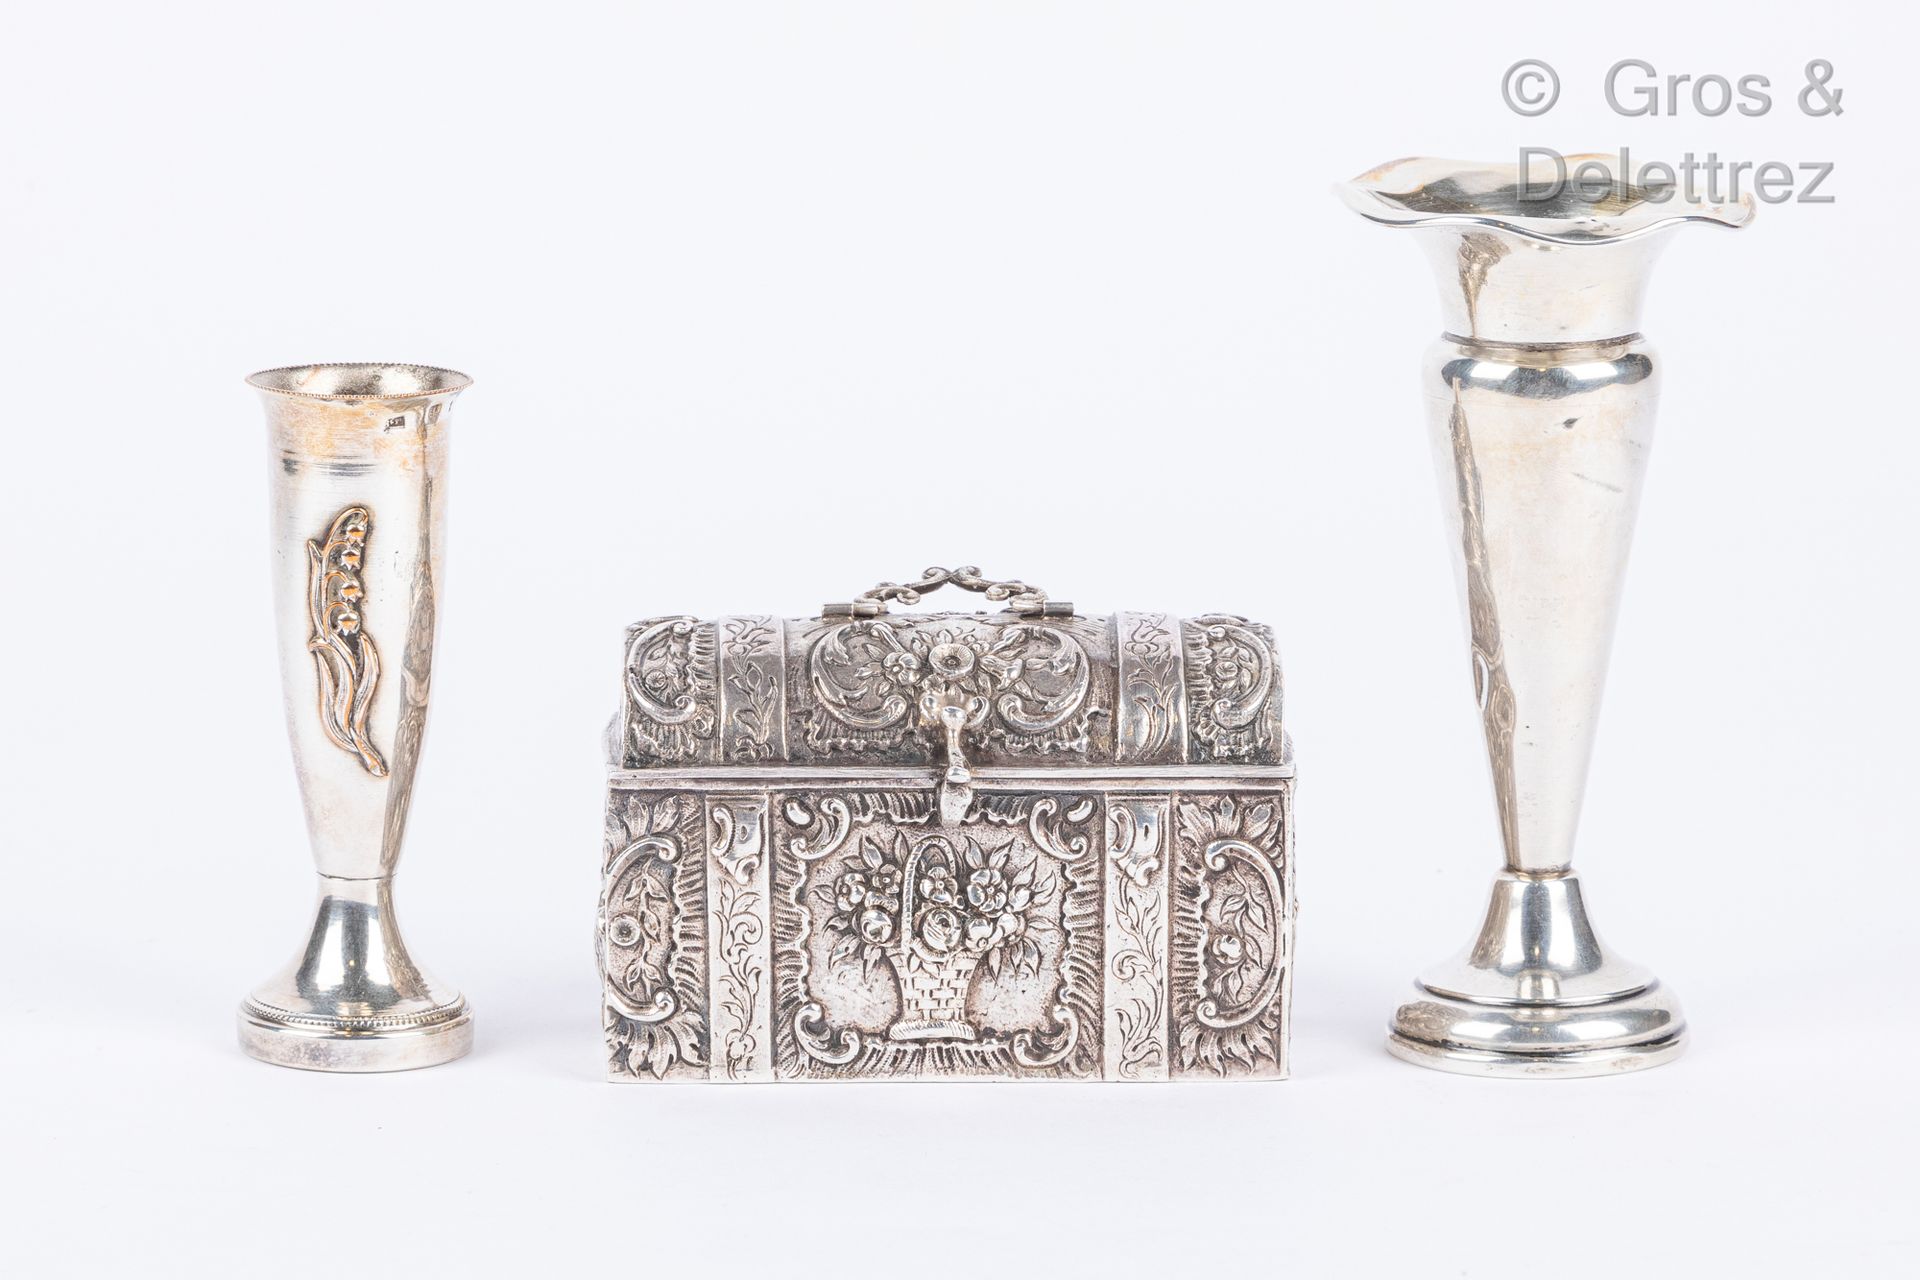 Null 一批银器包括:

- 英国作品的Soliflore花瓶

- 饰有花篮和罗盖尔的微型箱子。荷兰的工作。

毛重：226克

冲击和划痕

一个小的So&hellip;